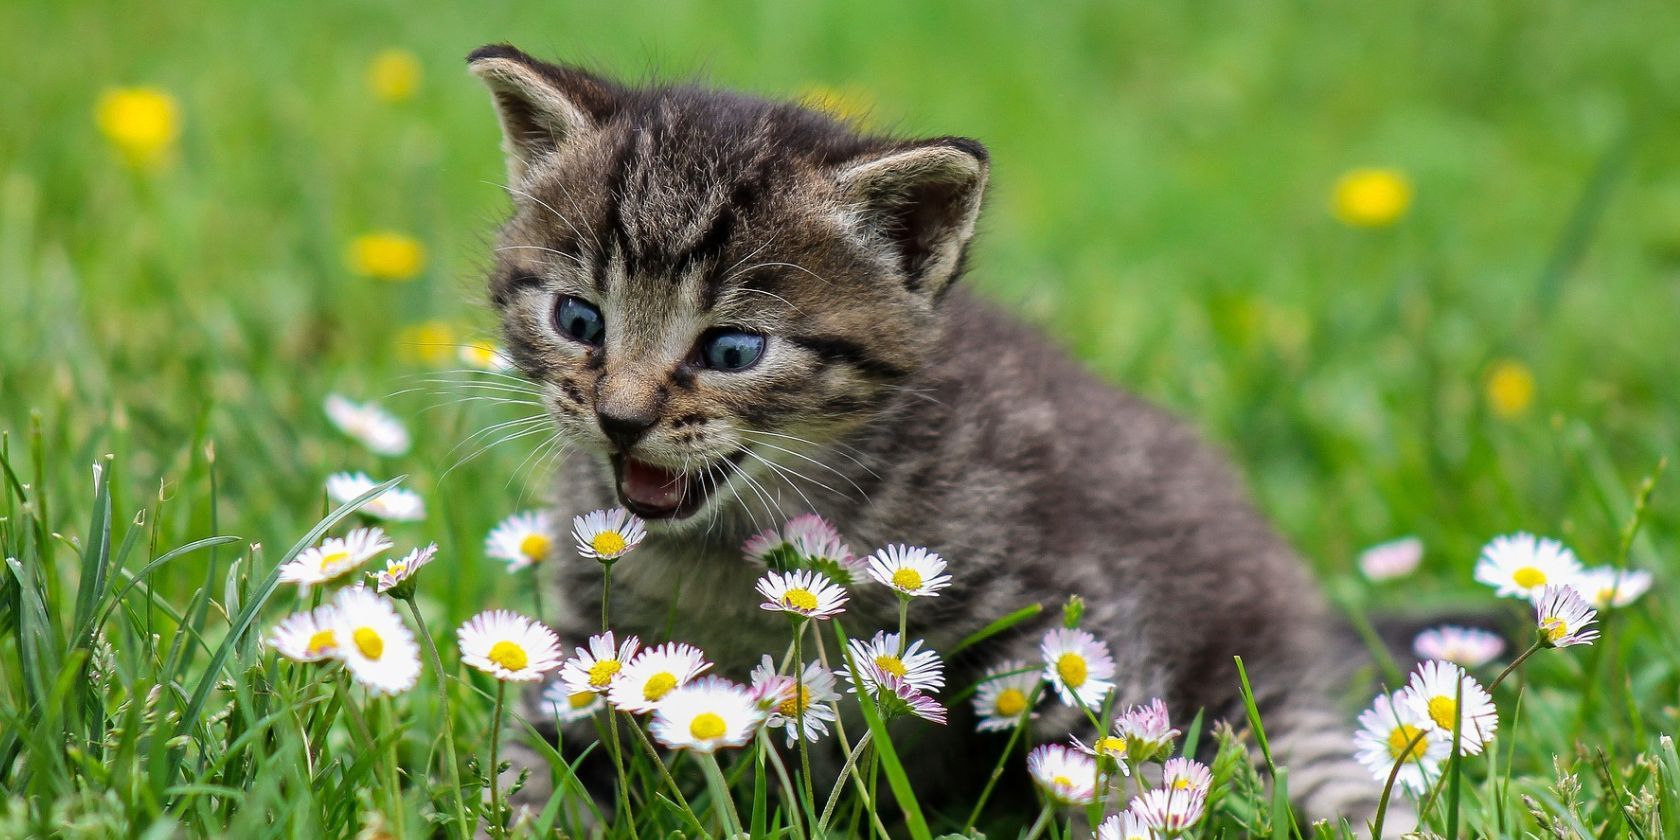 kitten meowing at flowers in garden